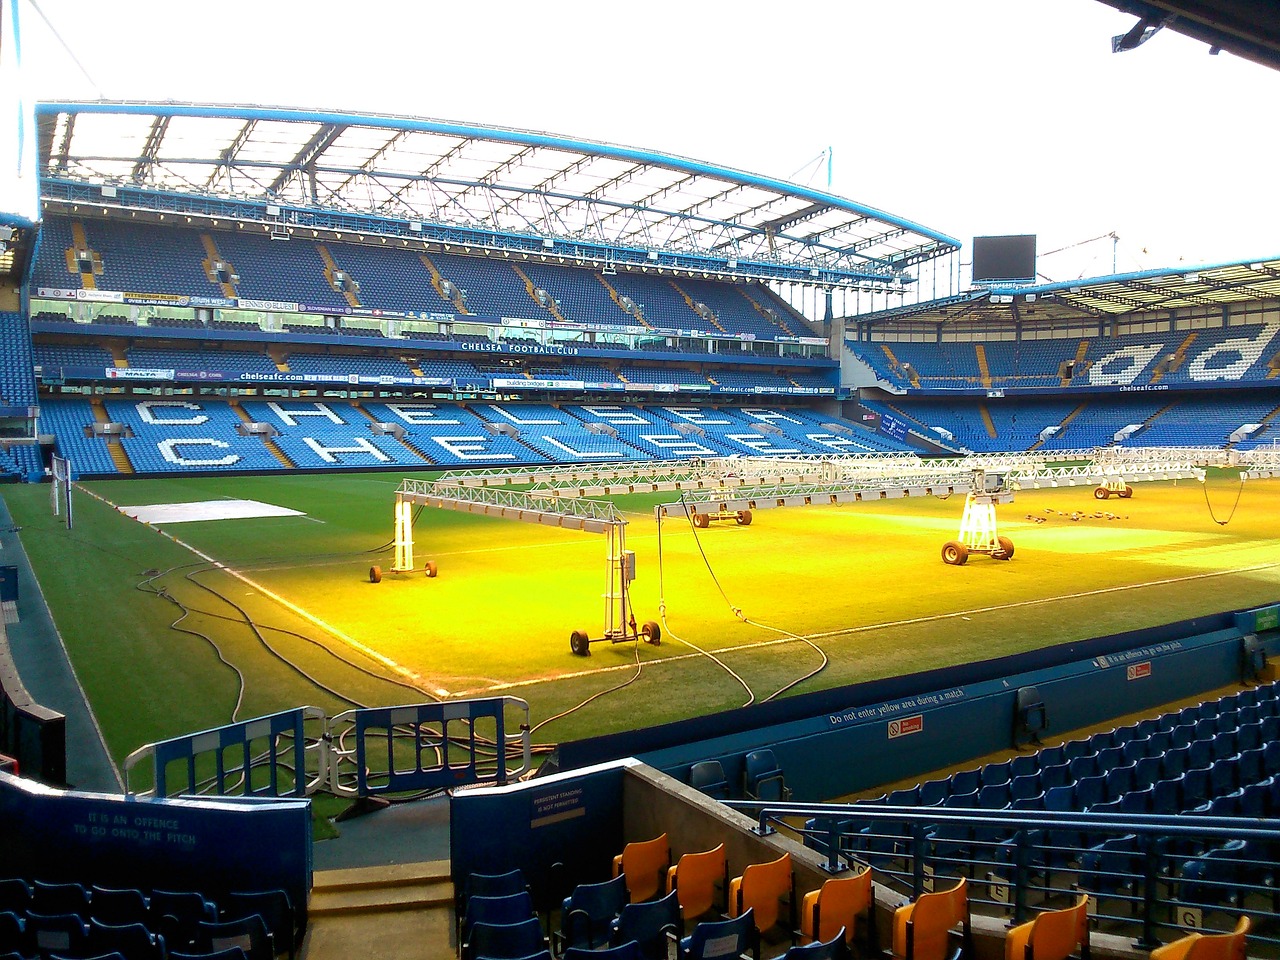 Stamford Bridge: The Home of FC Chelsea Football Club